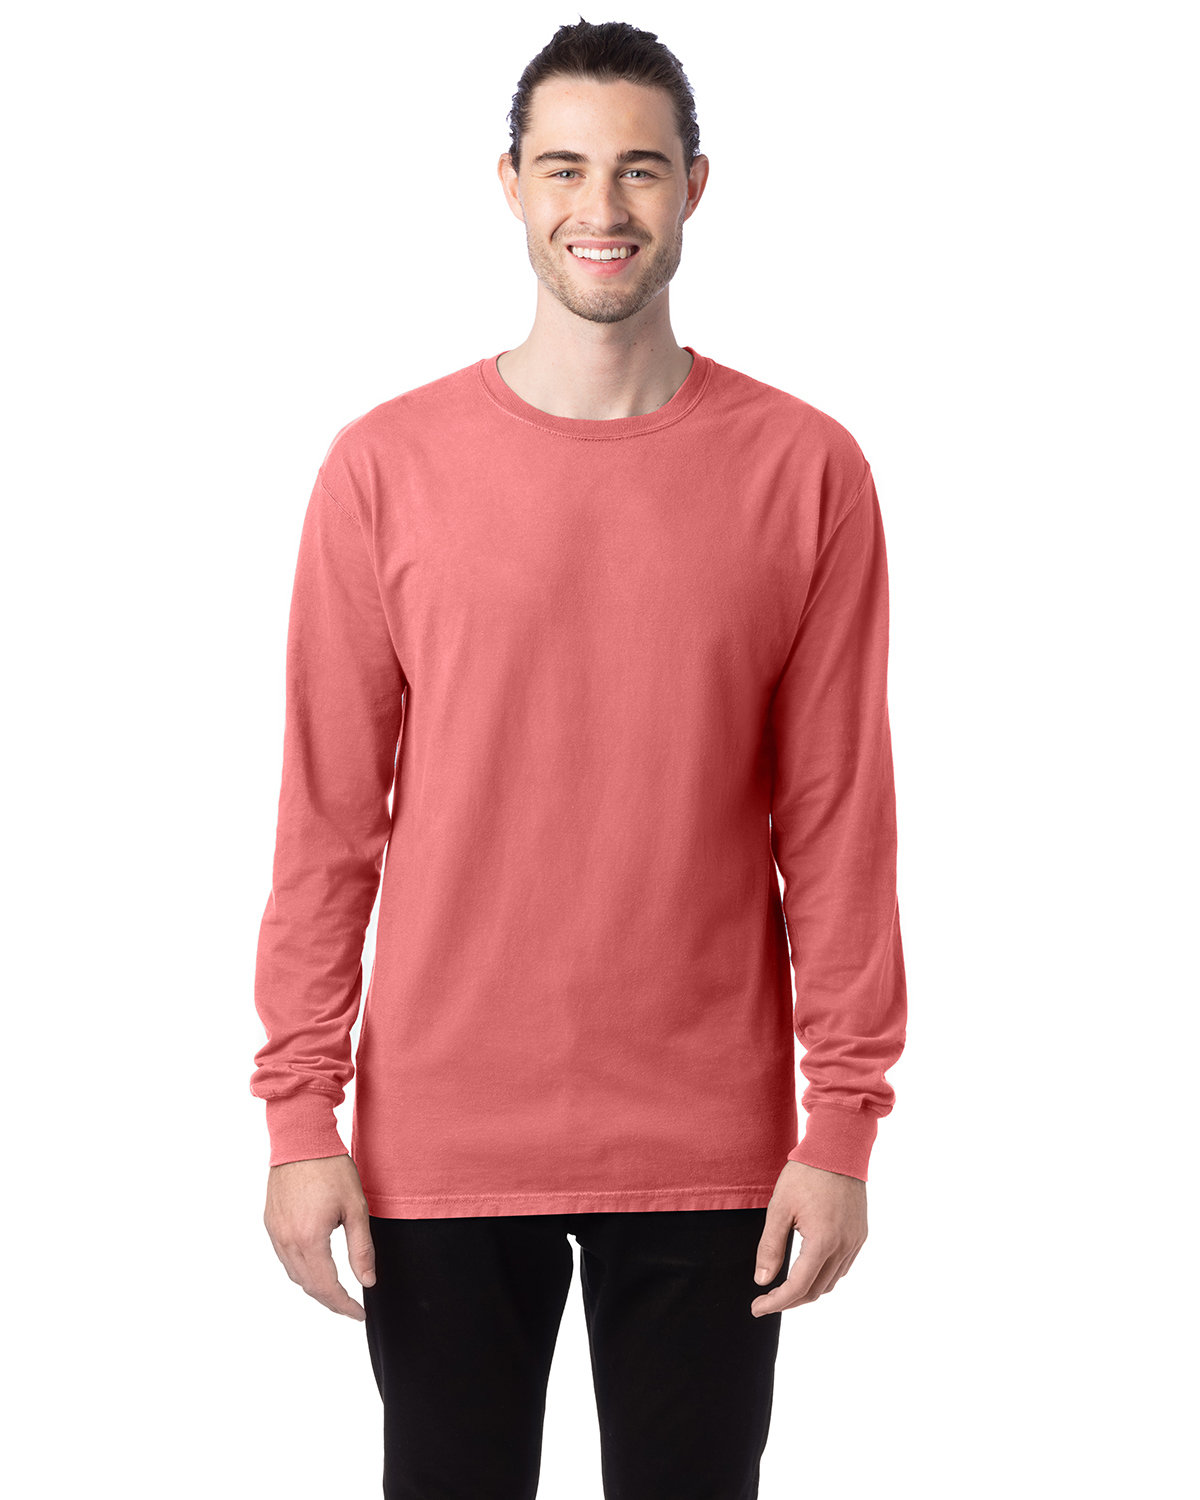 ComfortWash by Hanes Unisex Garment-Dyed Long-Sleeve T-Shirt CORAL CRAZE 